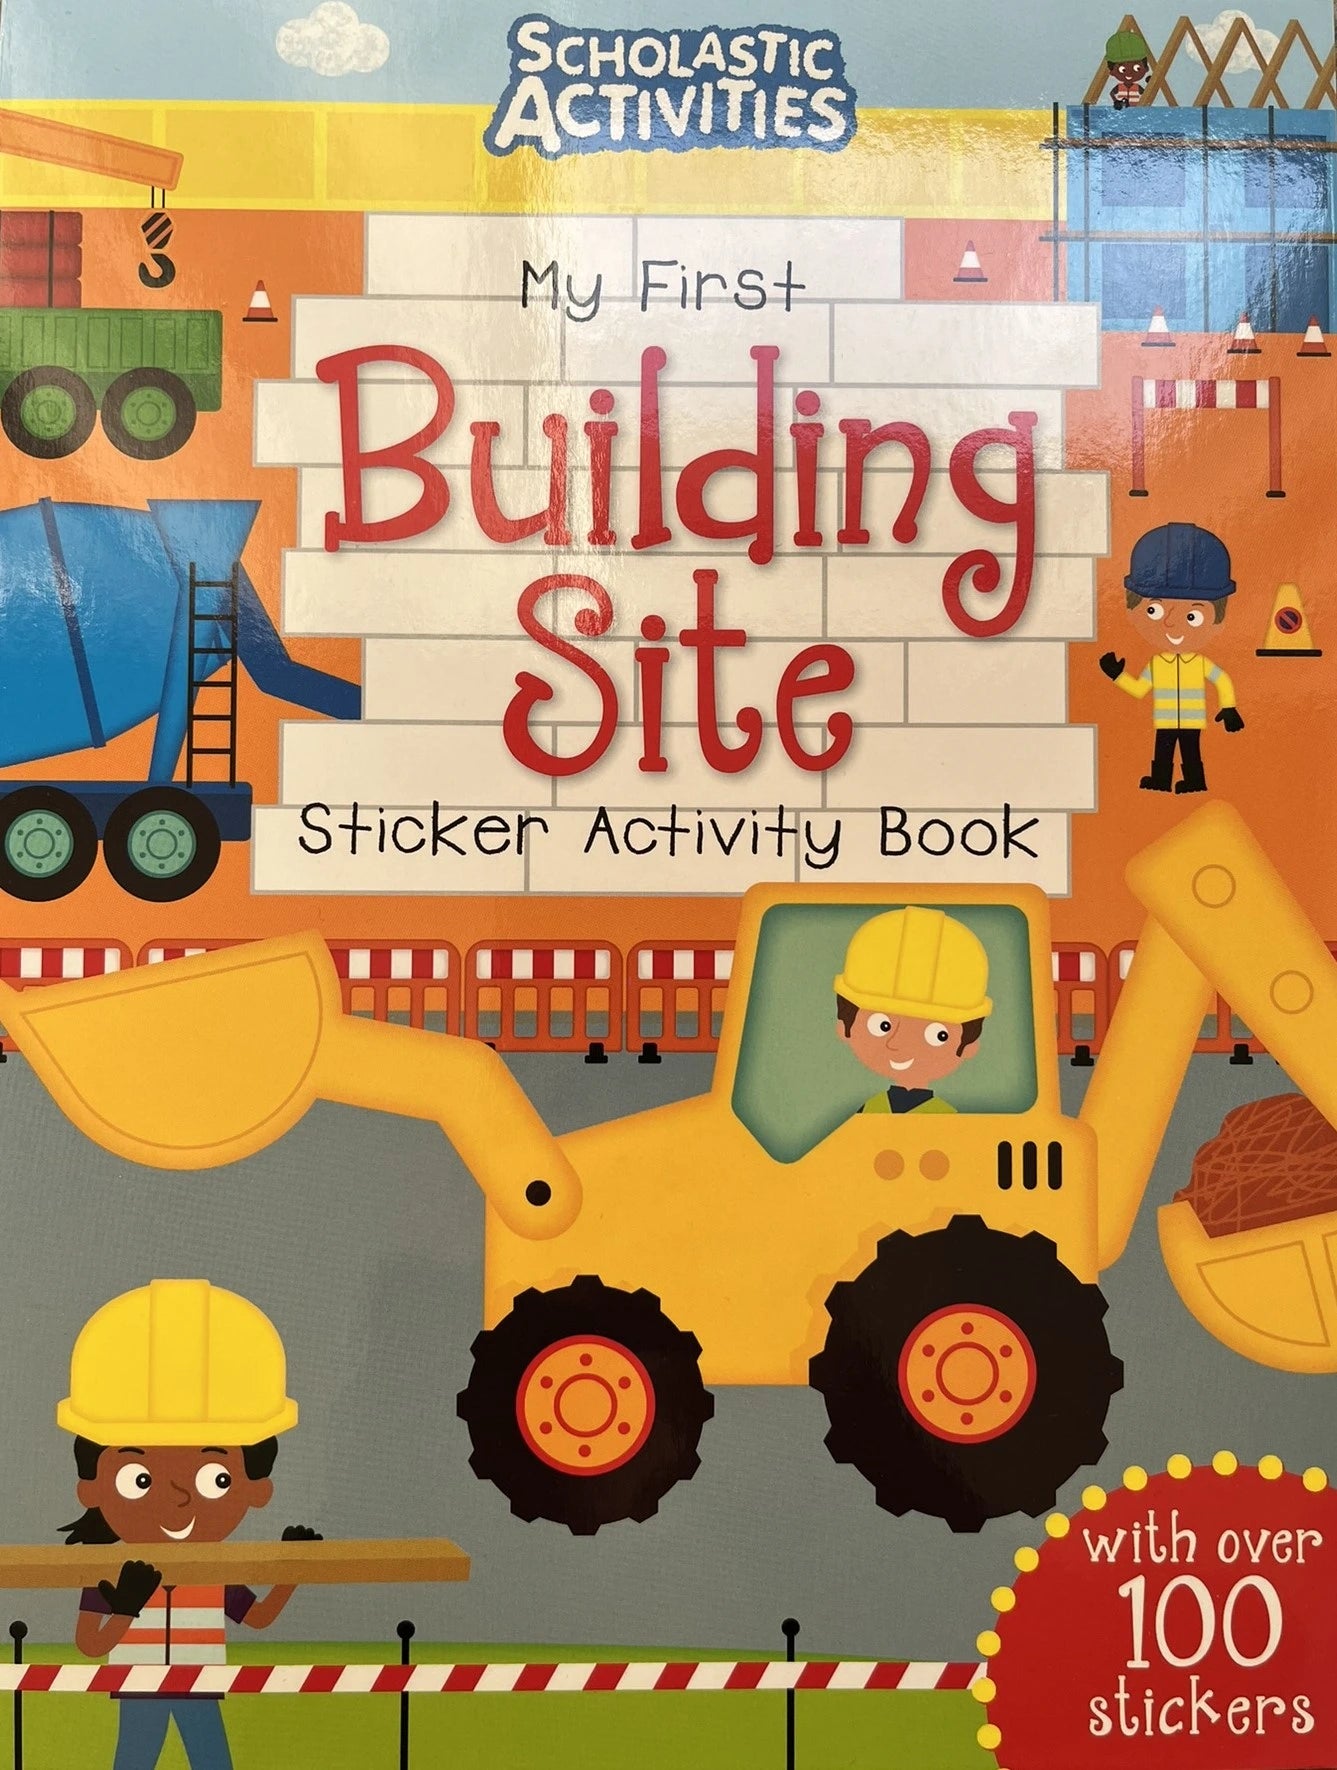 My First Building Site Sticker Activity Book (Scholastic Activities)